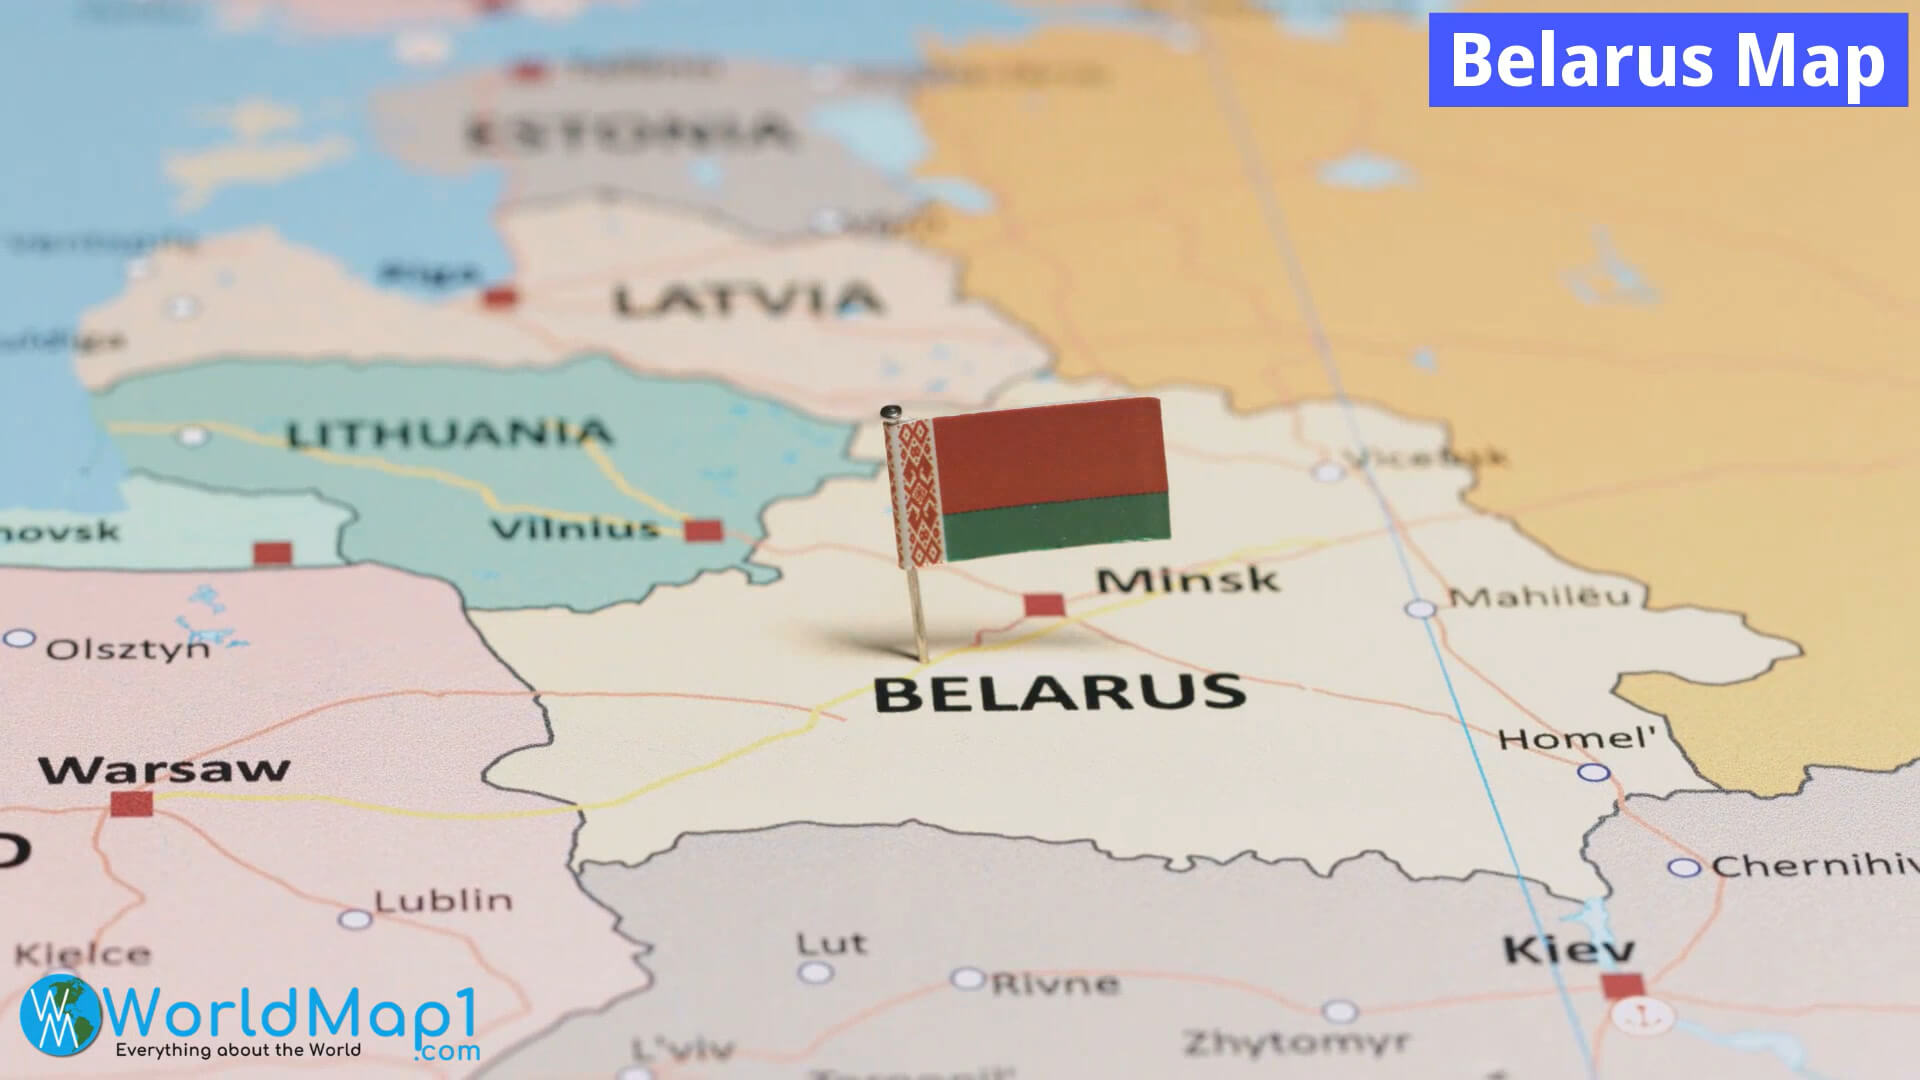 Belarus Map with Capital Minsk